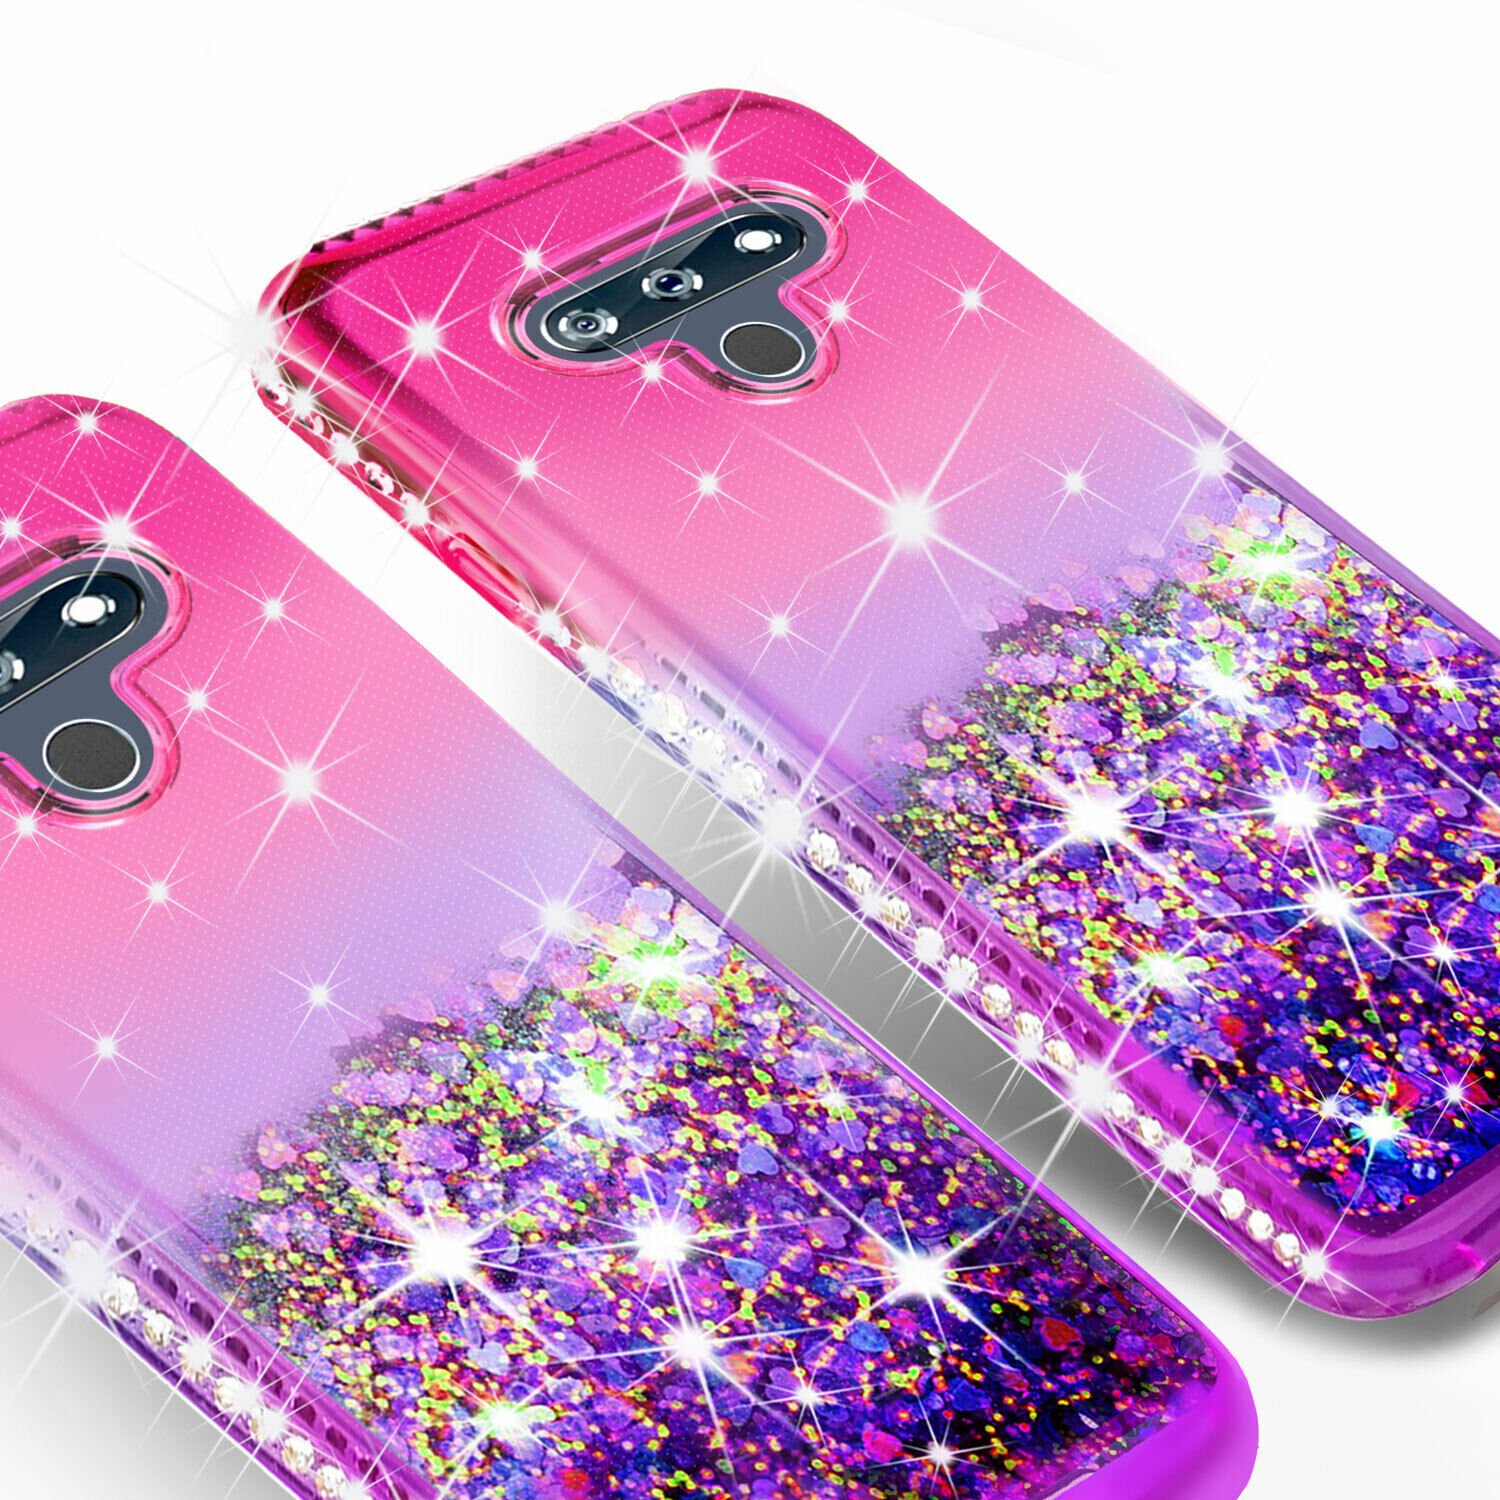 LG LG Harmony 4, Premier Pro Plus L455DL Case w[Temper Glass] Cute Liquid Glitter Bling Diamond Bumper Girls Women Phone Case for LG LG Harmony 4, Premier Pro Plus L455DL - Pink/Purple - image 4 of 5